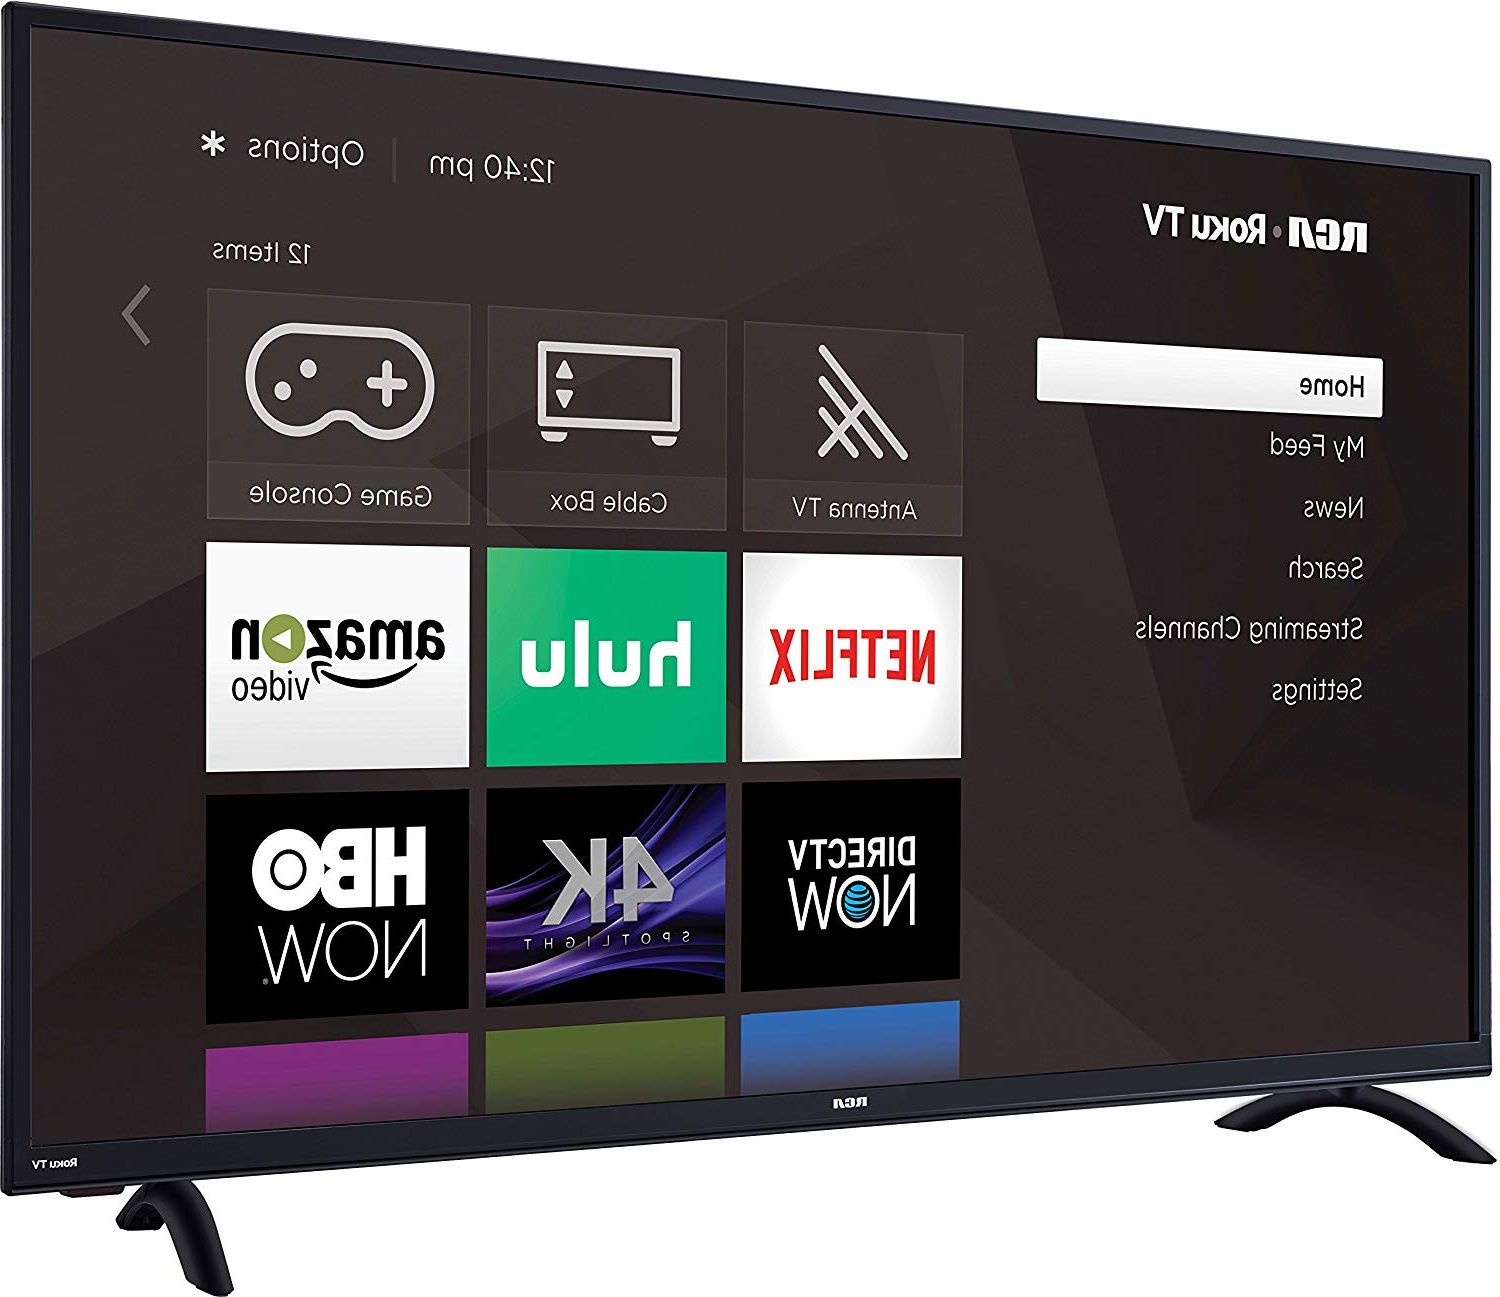 Dixon White 84 Inch Tv Stands In Preferred Amazon: Rca Rtru5027 50" 4k Ultra Hd Roku Smart Led Tv (4k,  (View 7 of 20)